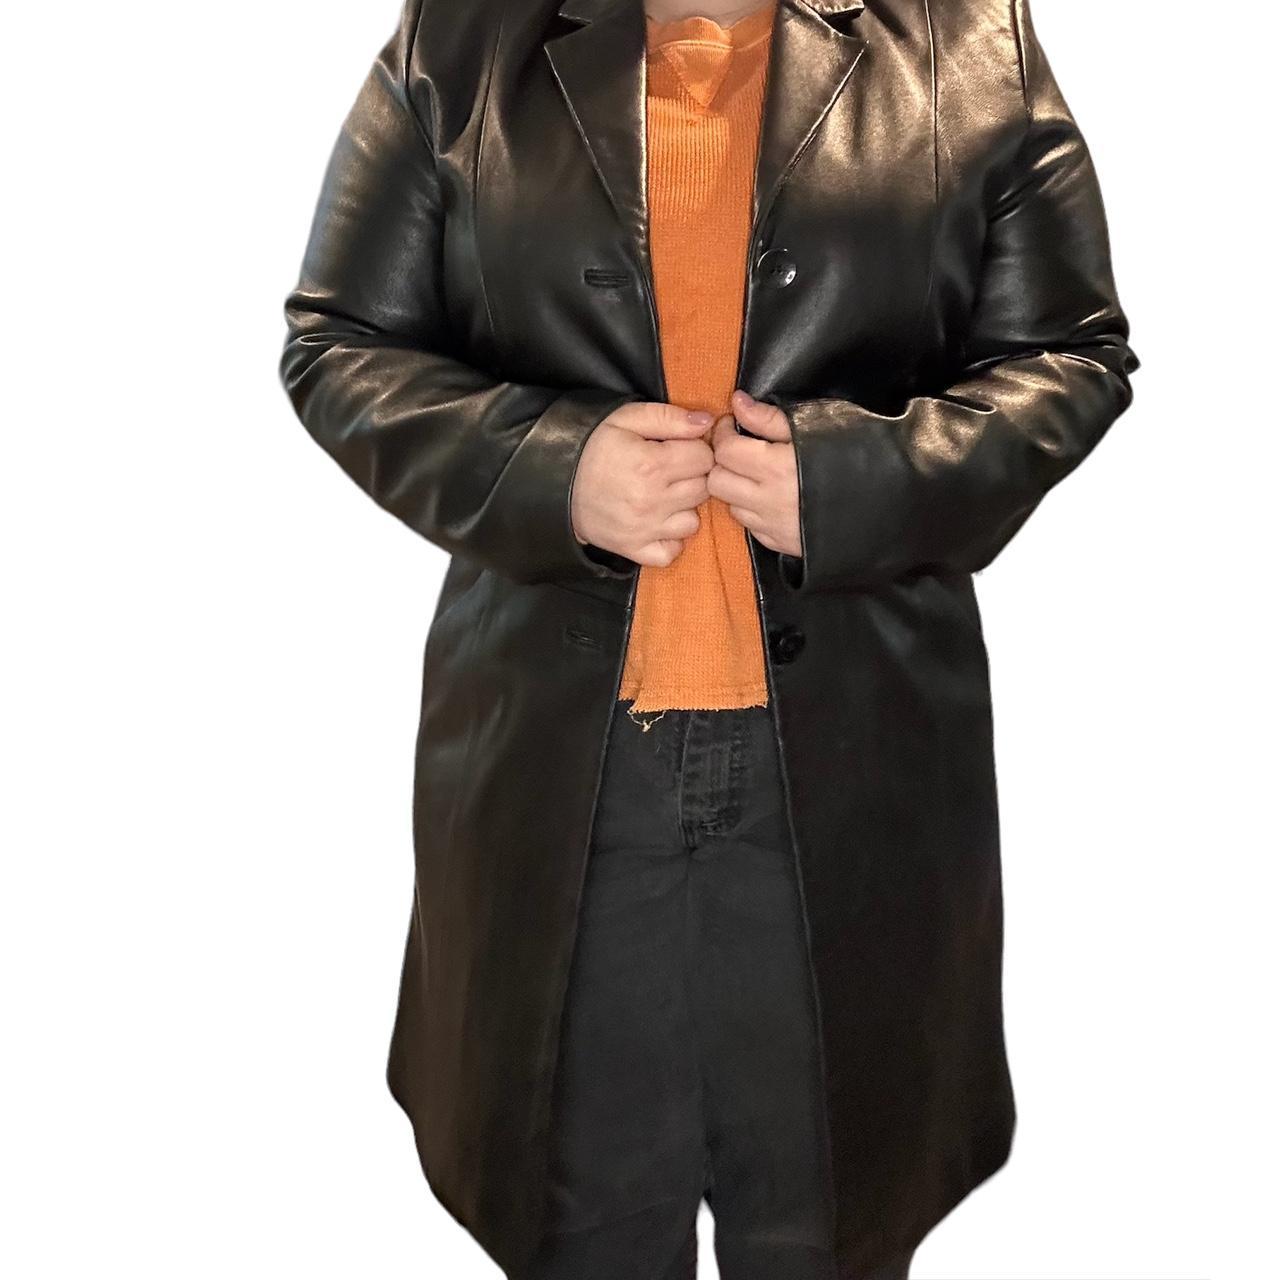 Wilson’s Leather Women's Black Coat (7)